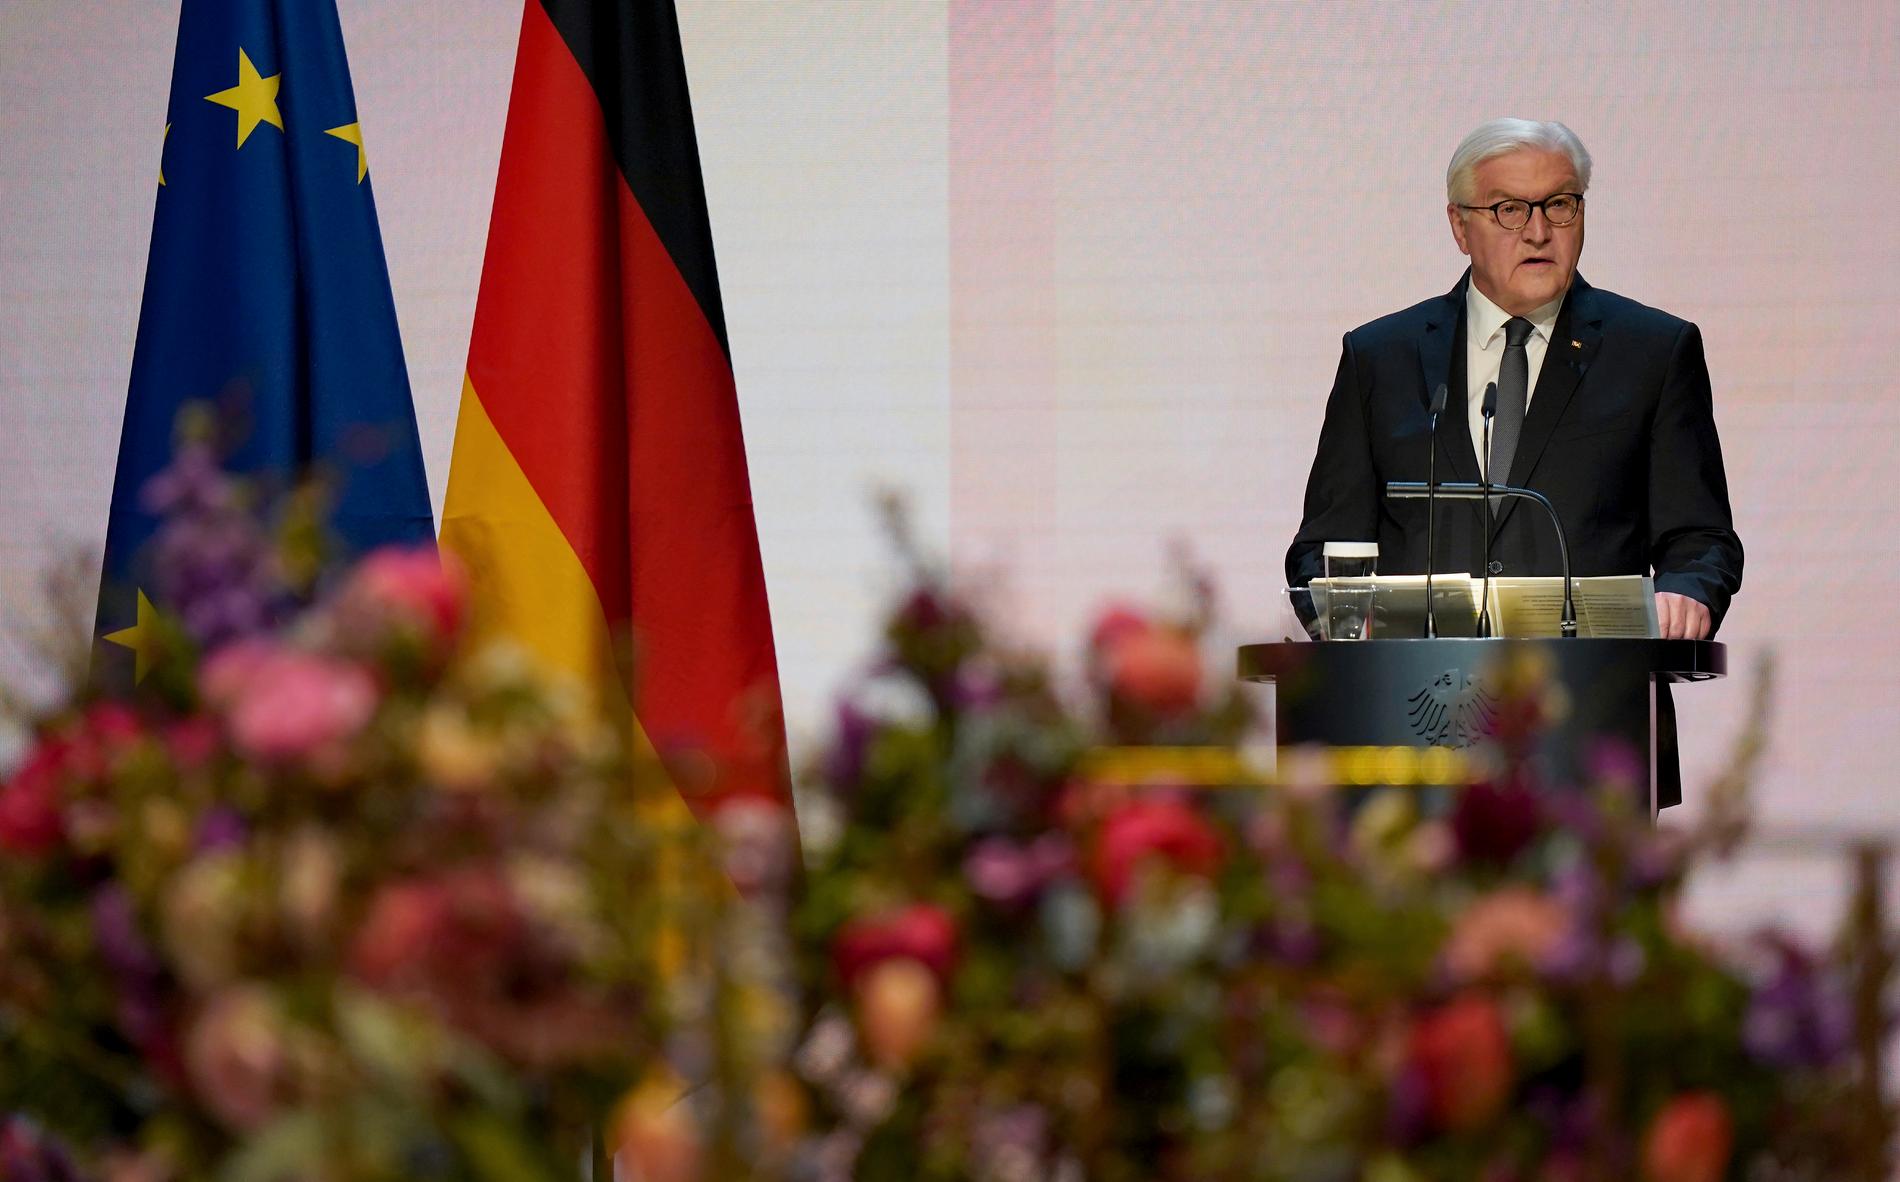 Tysklands president Frank-Walter Steinmeier vid minnesceremonin.